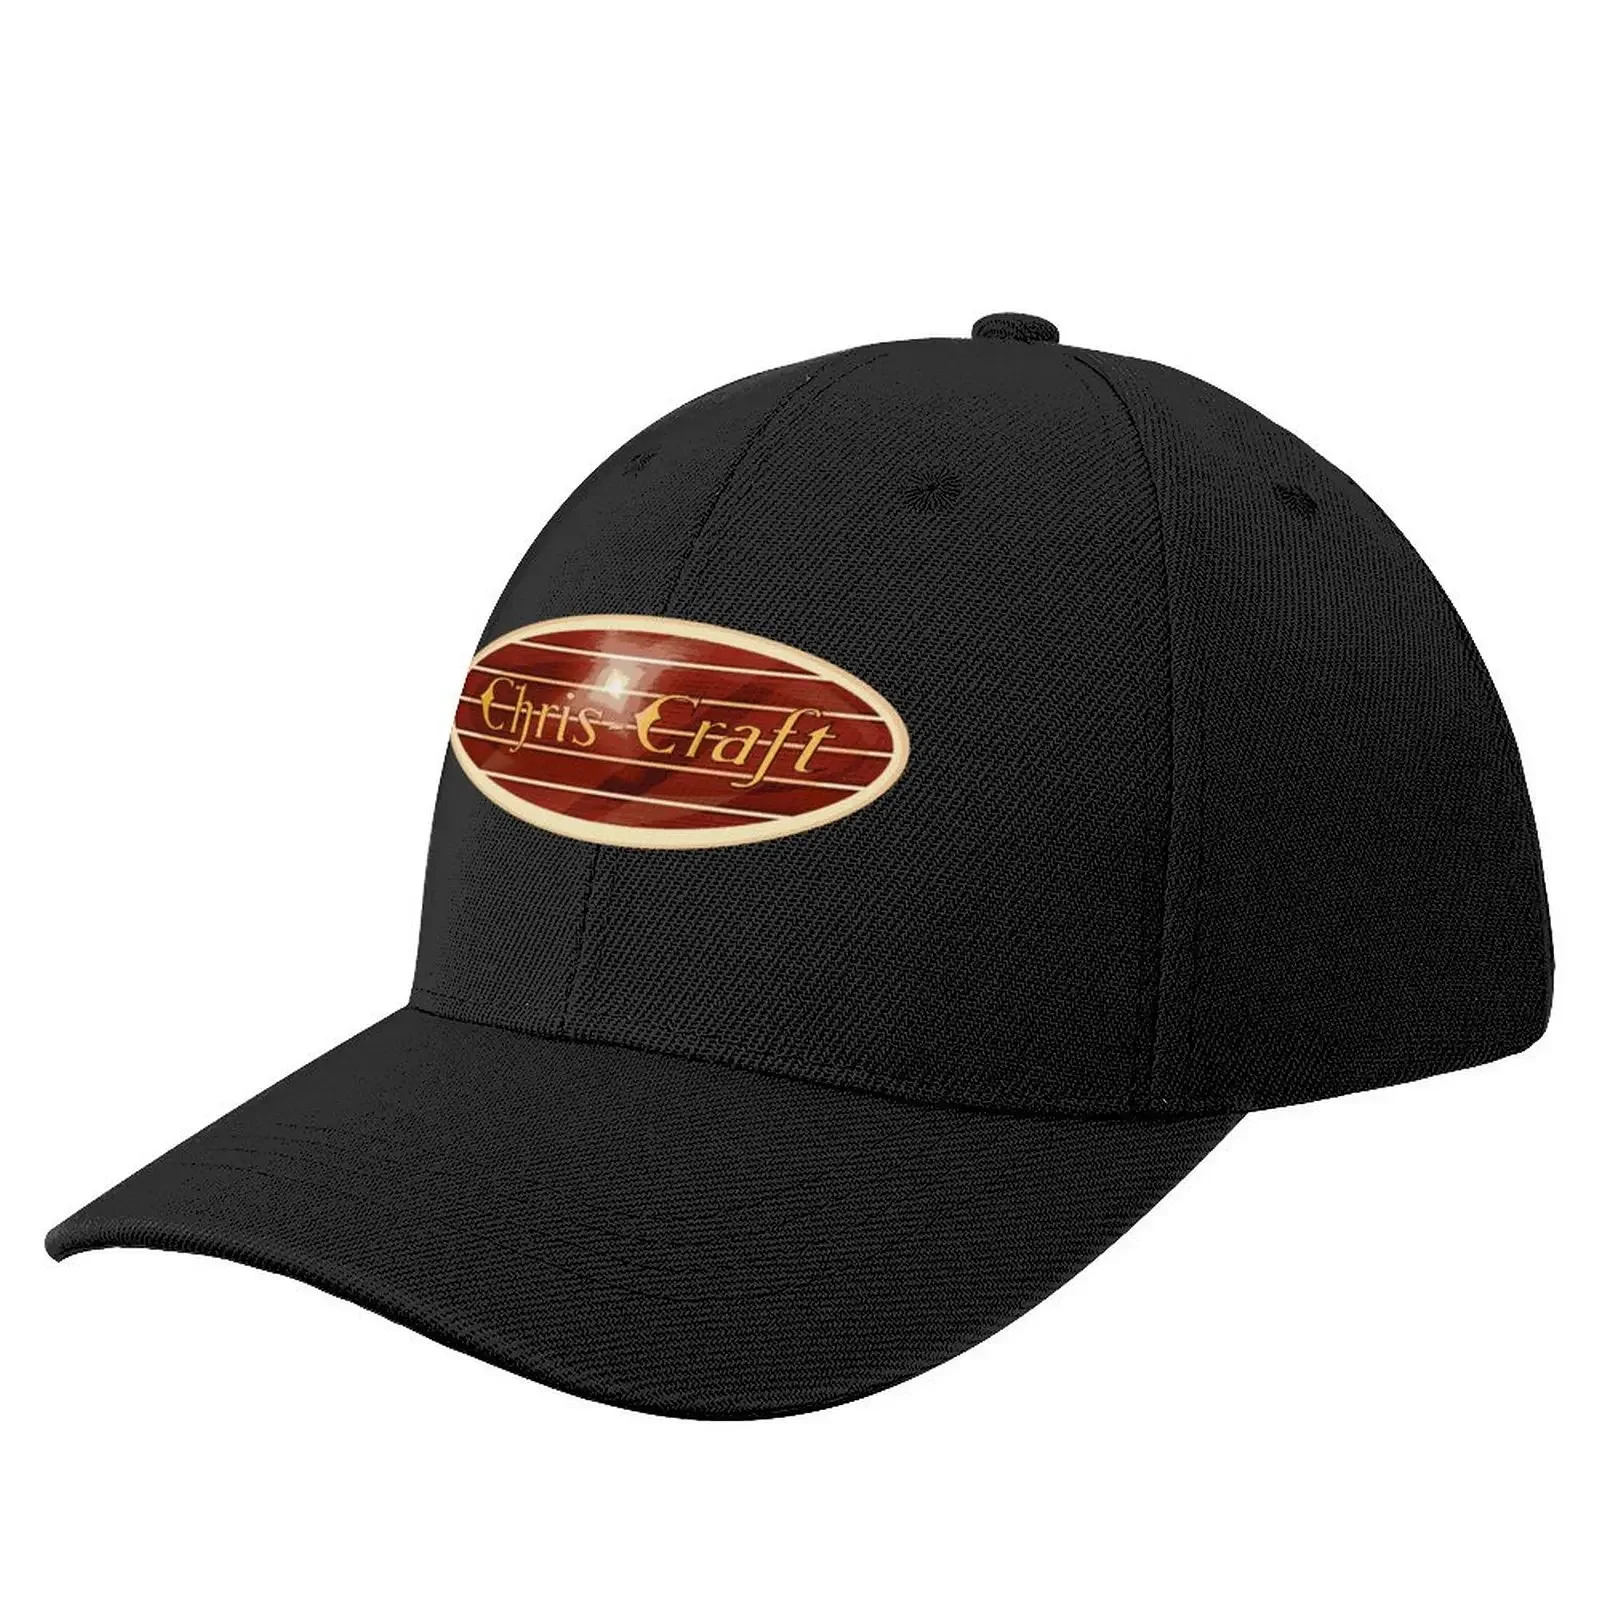 

Chris Craft vintage boats USA Baseball Cap Military Cap Man Luxury Hat Women's Hats For The Sun Men's